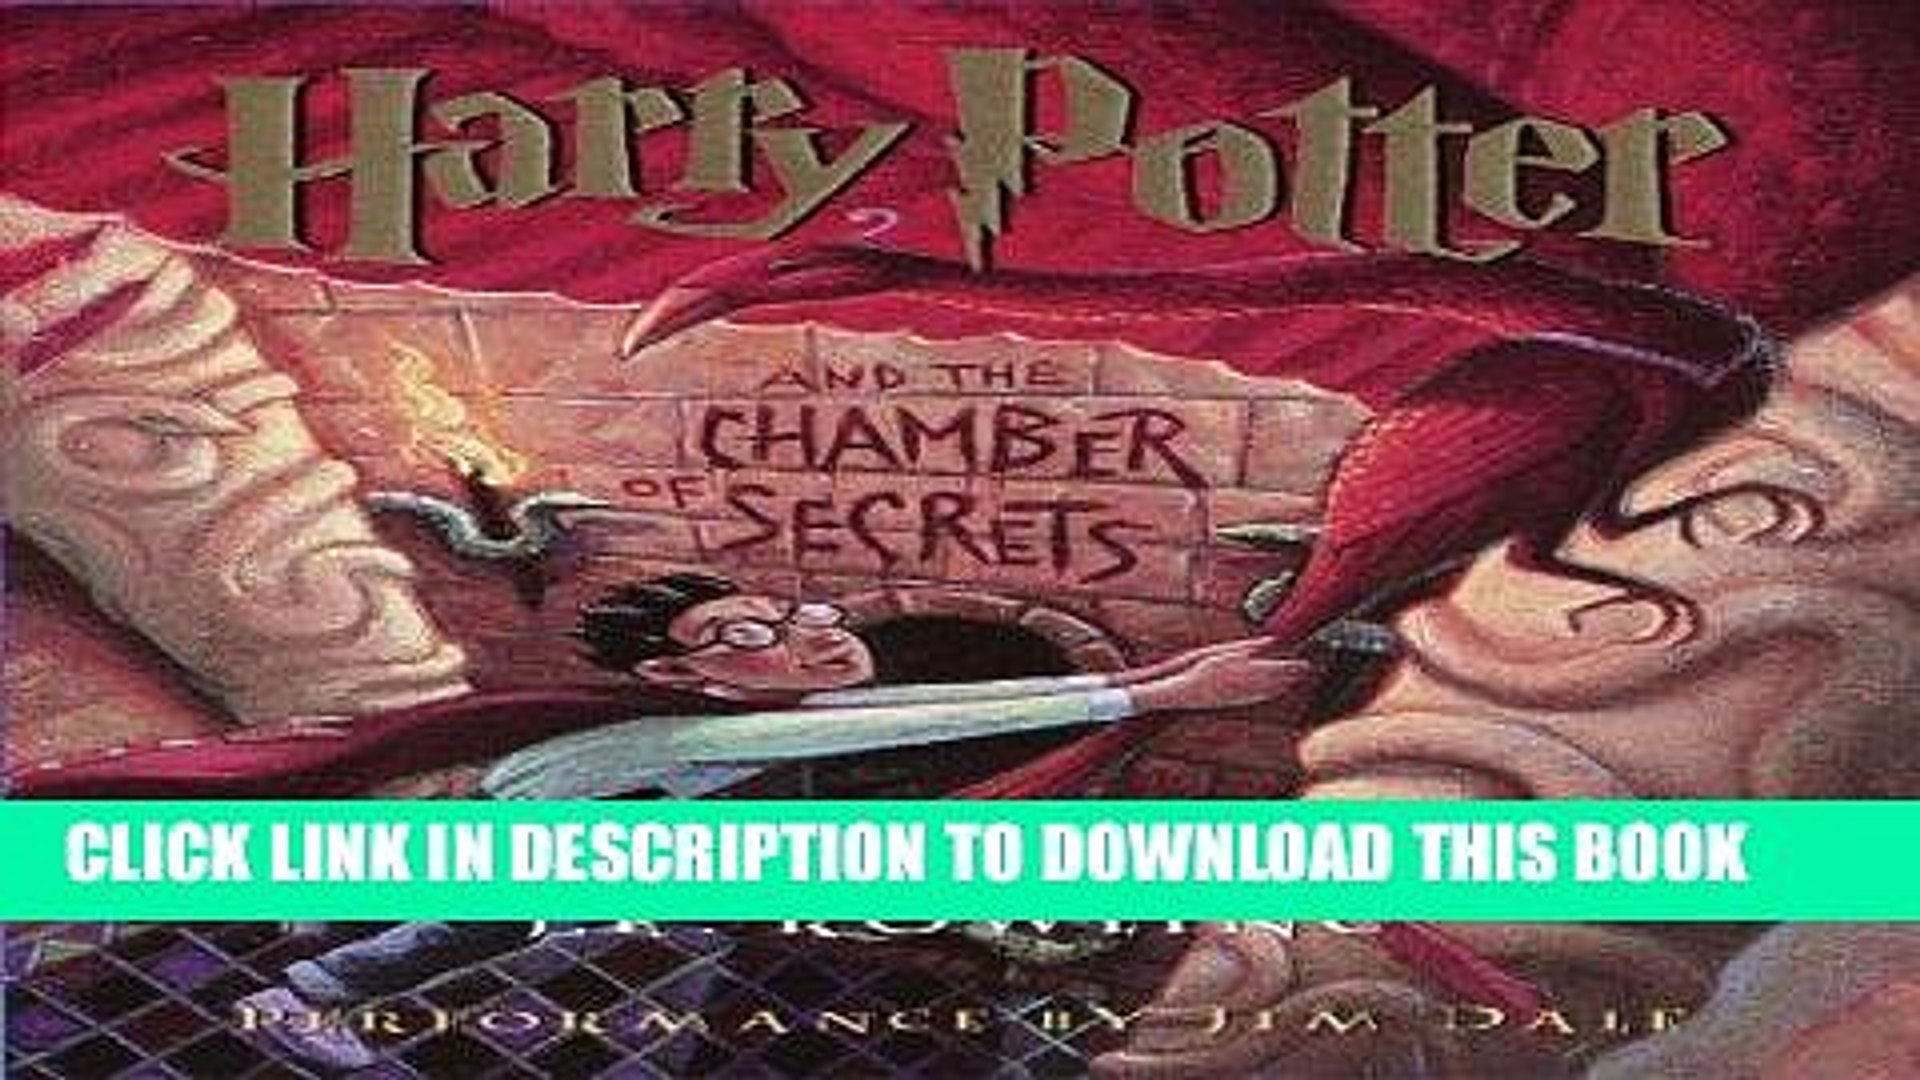 Harry potter chamber secrets download movie